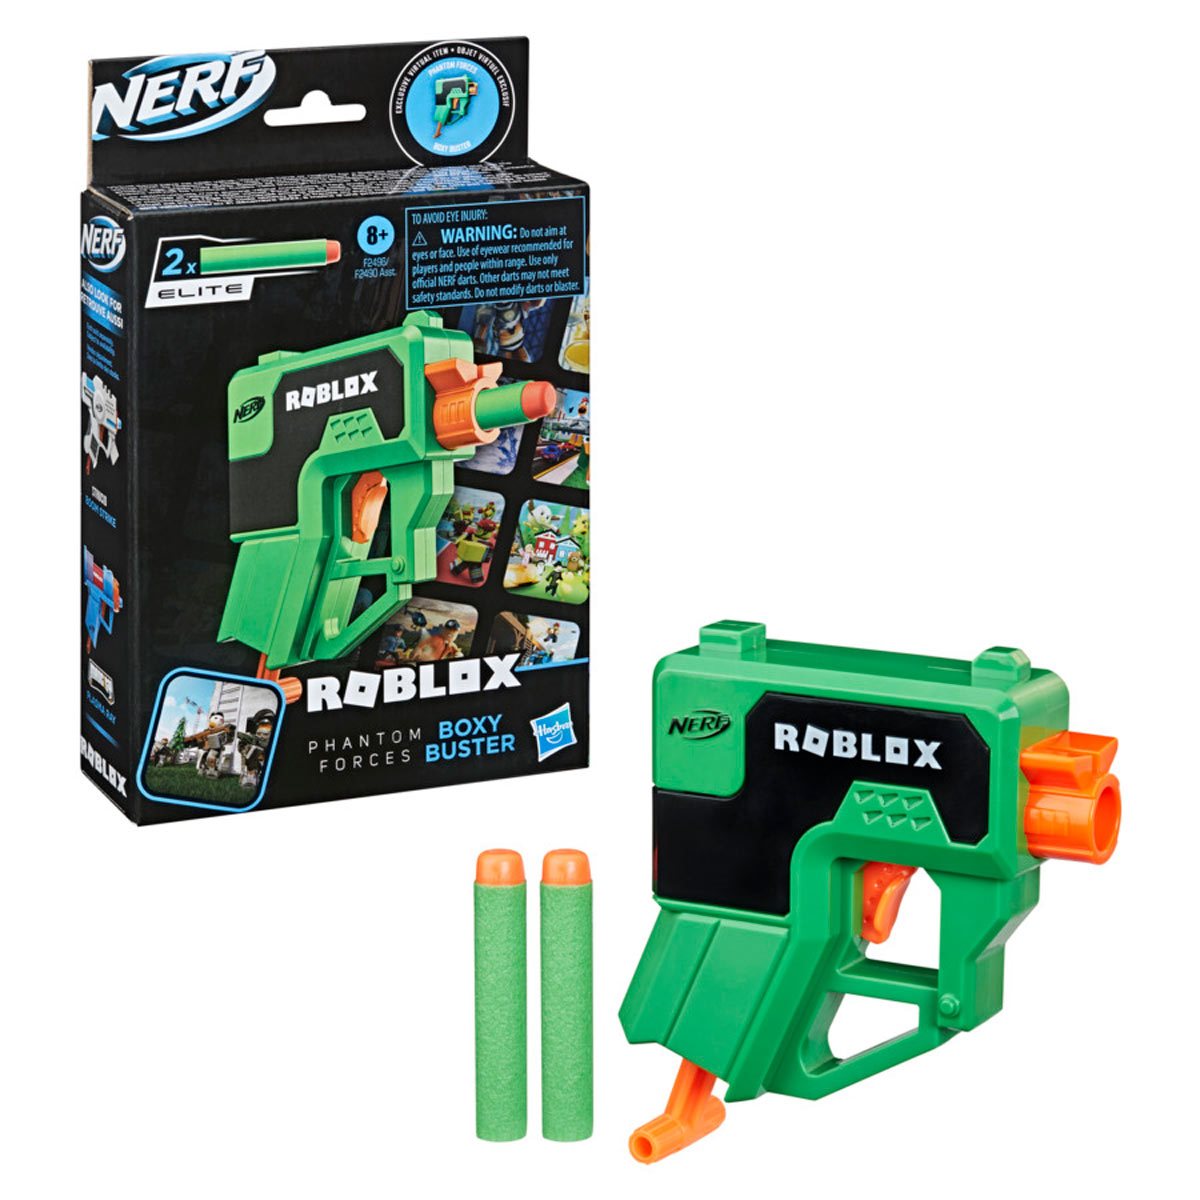 Nerf Roblox Arsenal: Pulse Laser Motorised Dart Blaster, 10 Nerf Darts